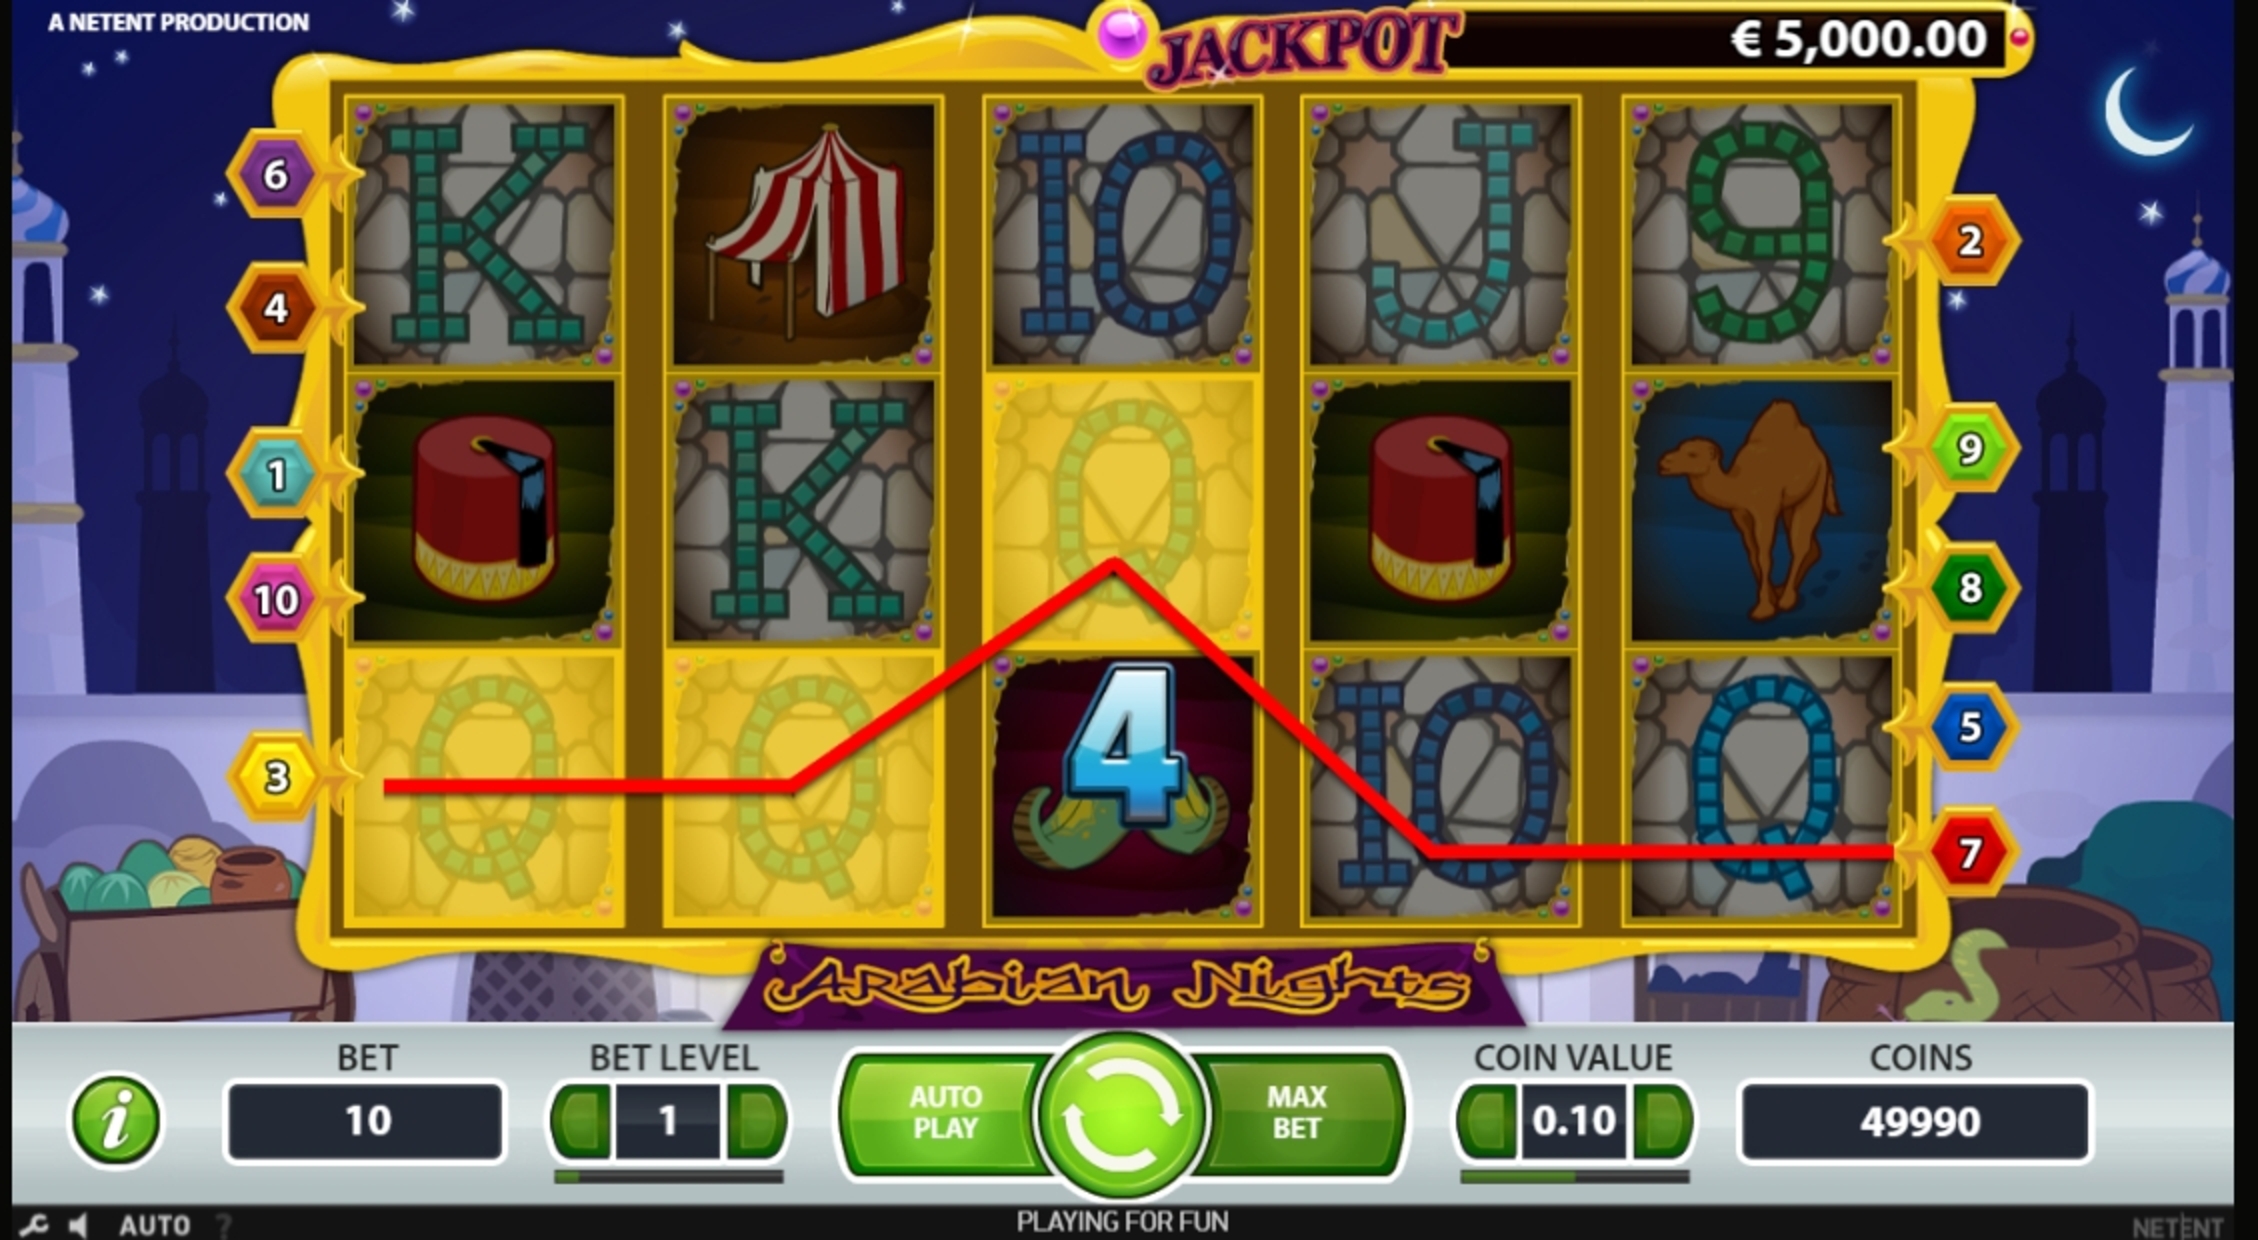 Win Money in Arabian Nights Free Slot Game by NetEnt